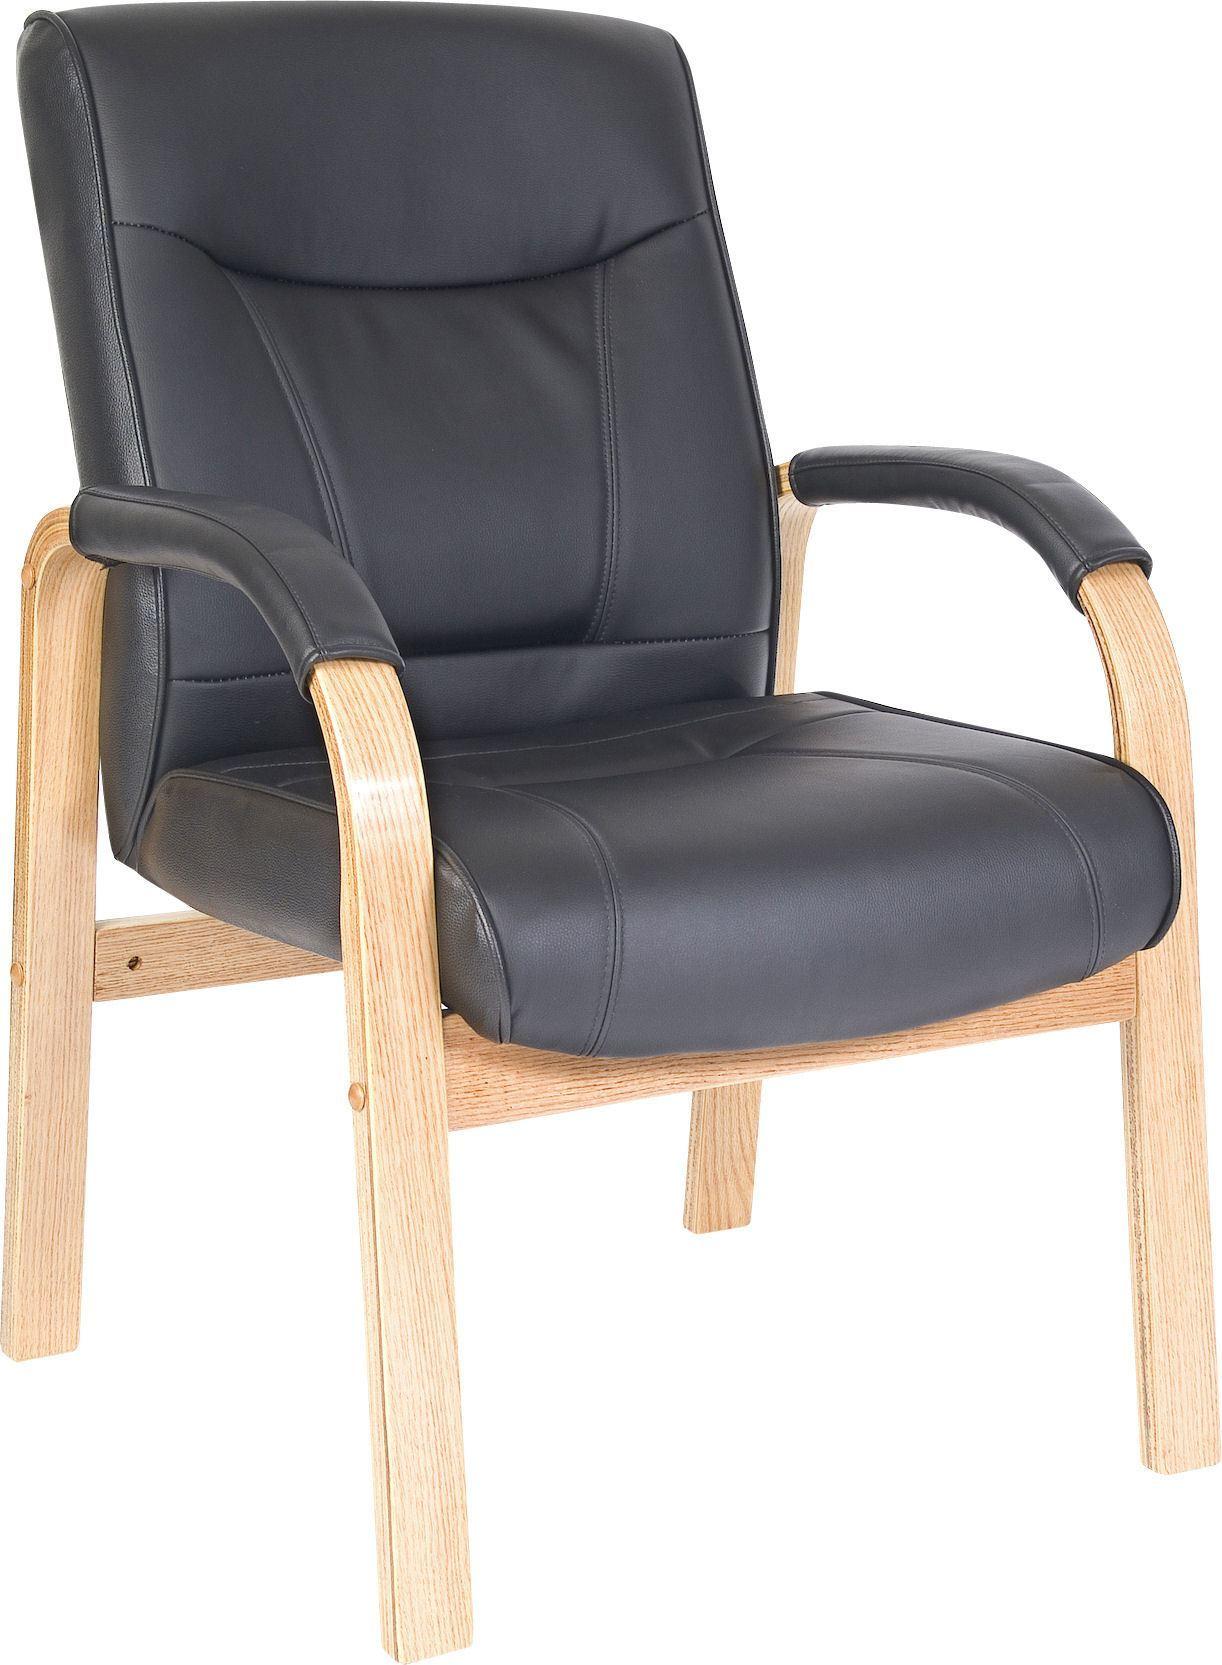 Kingston leather visitor chair (oak) - crimblefest furniture - image 1